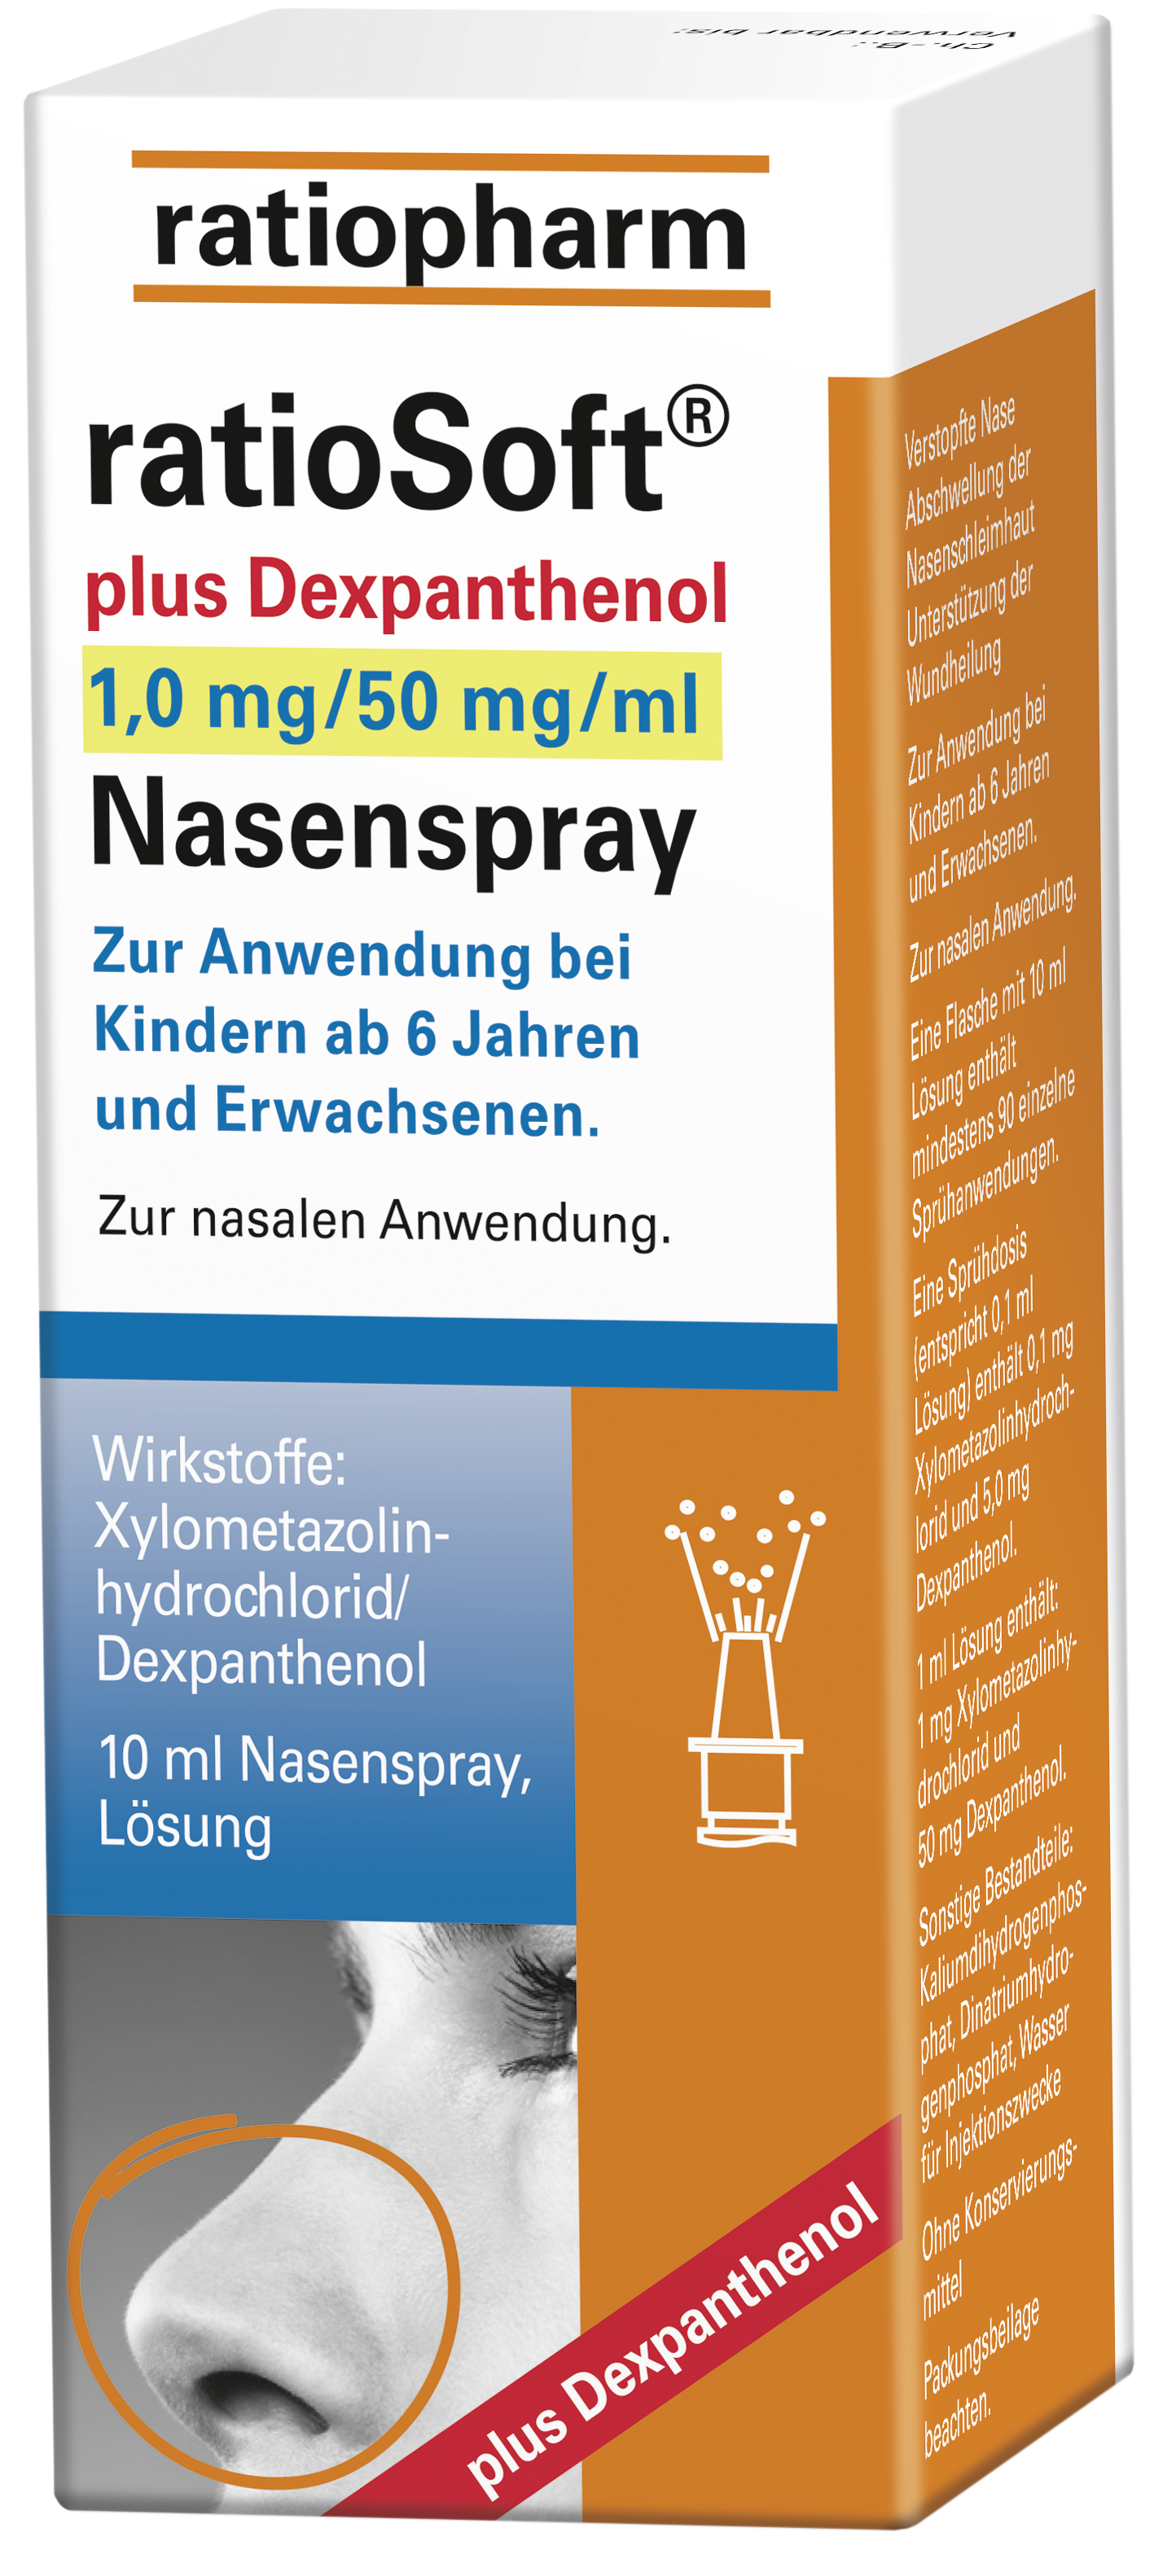 ratioSoft plus Dexpanthenol 1,0 mg/50 mg/ml - Nasenspray